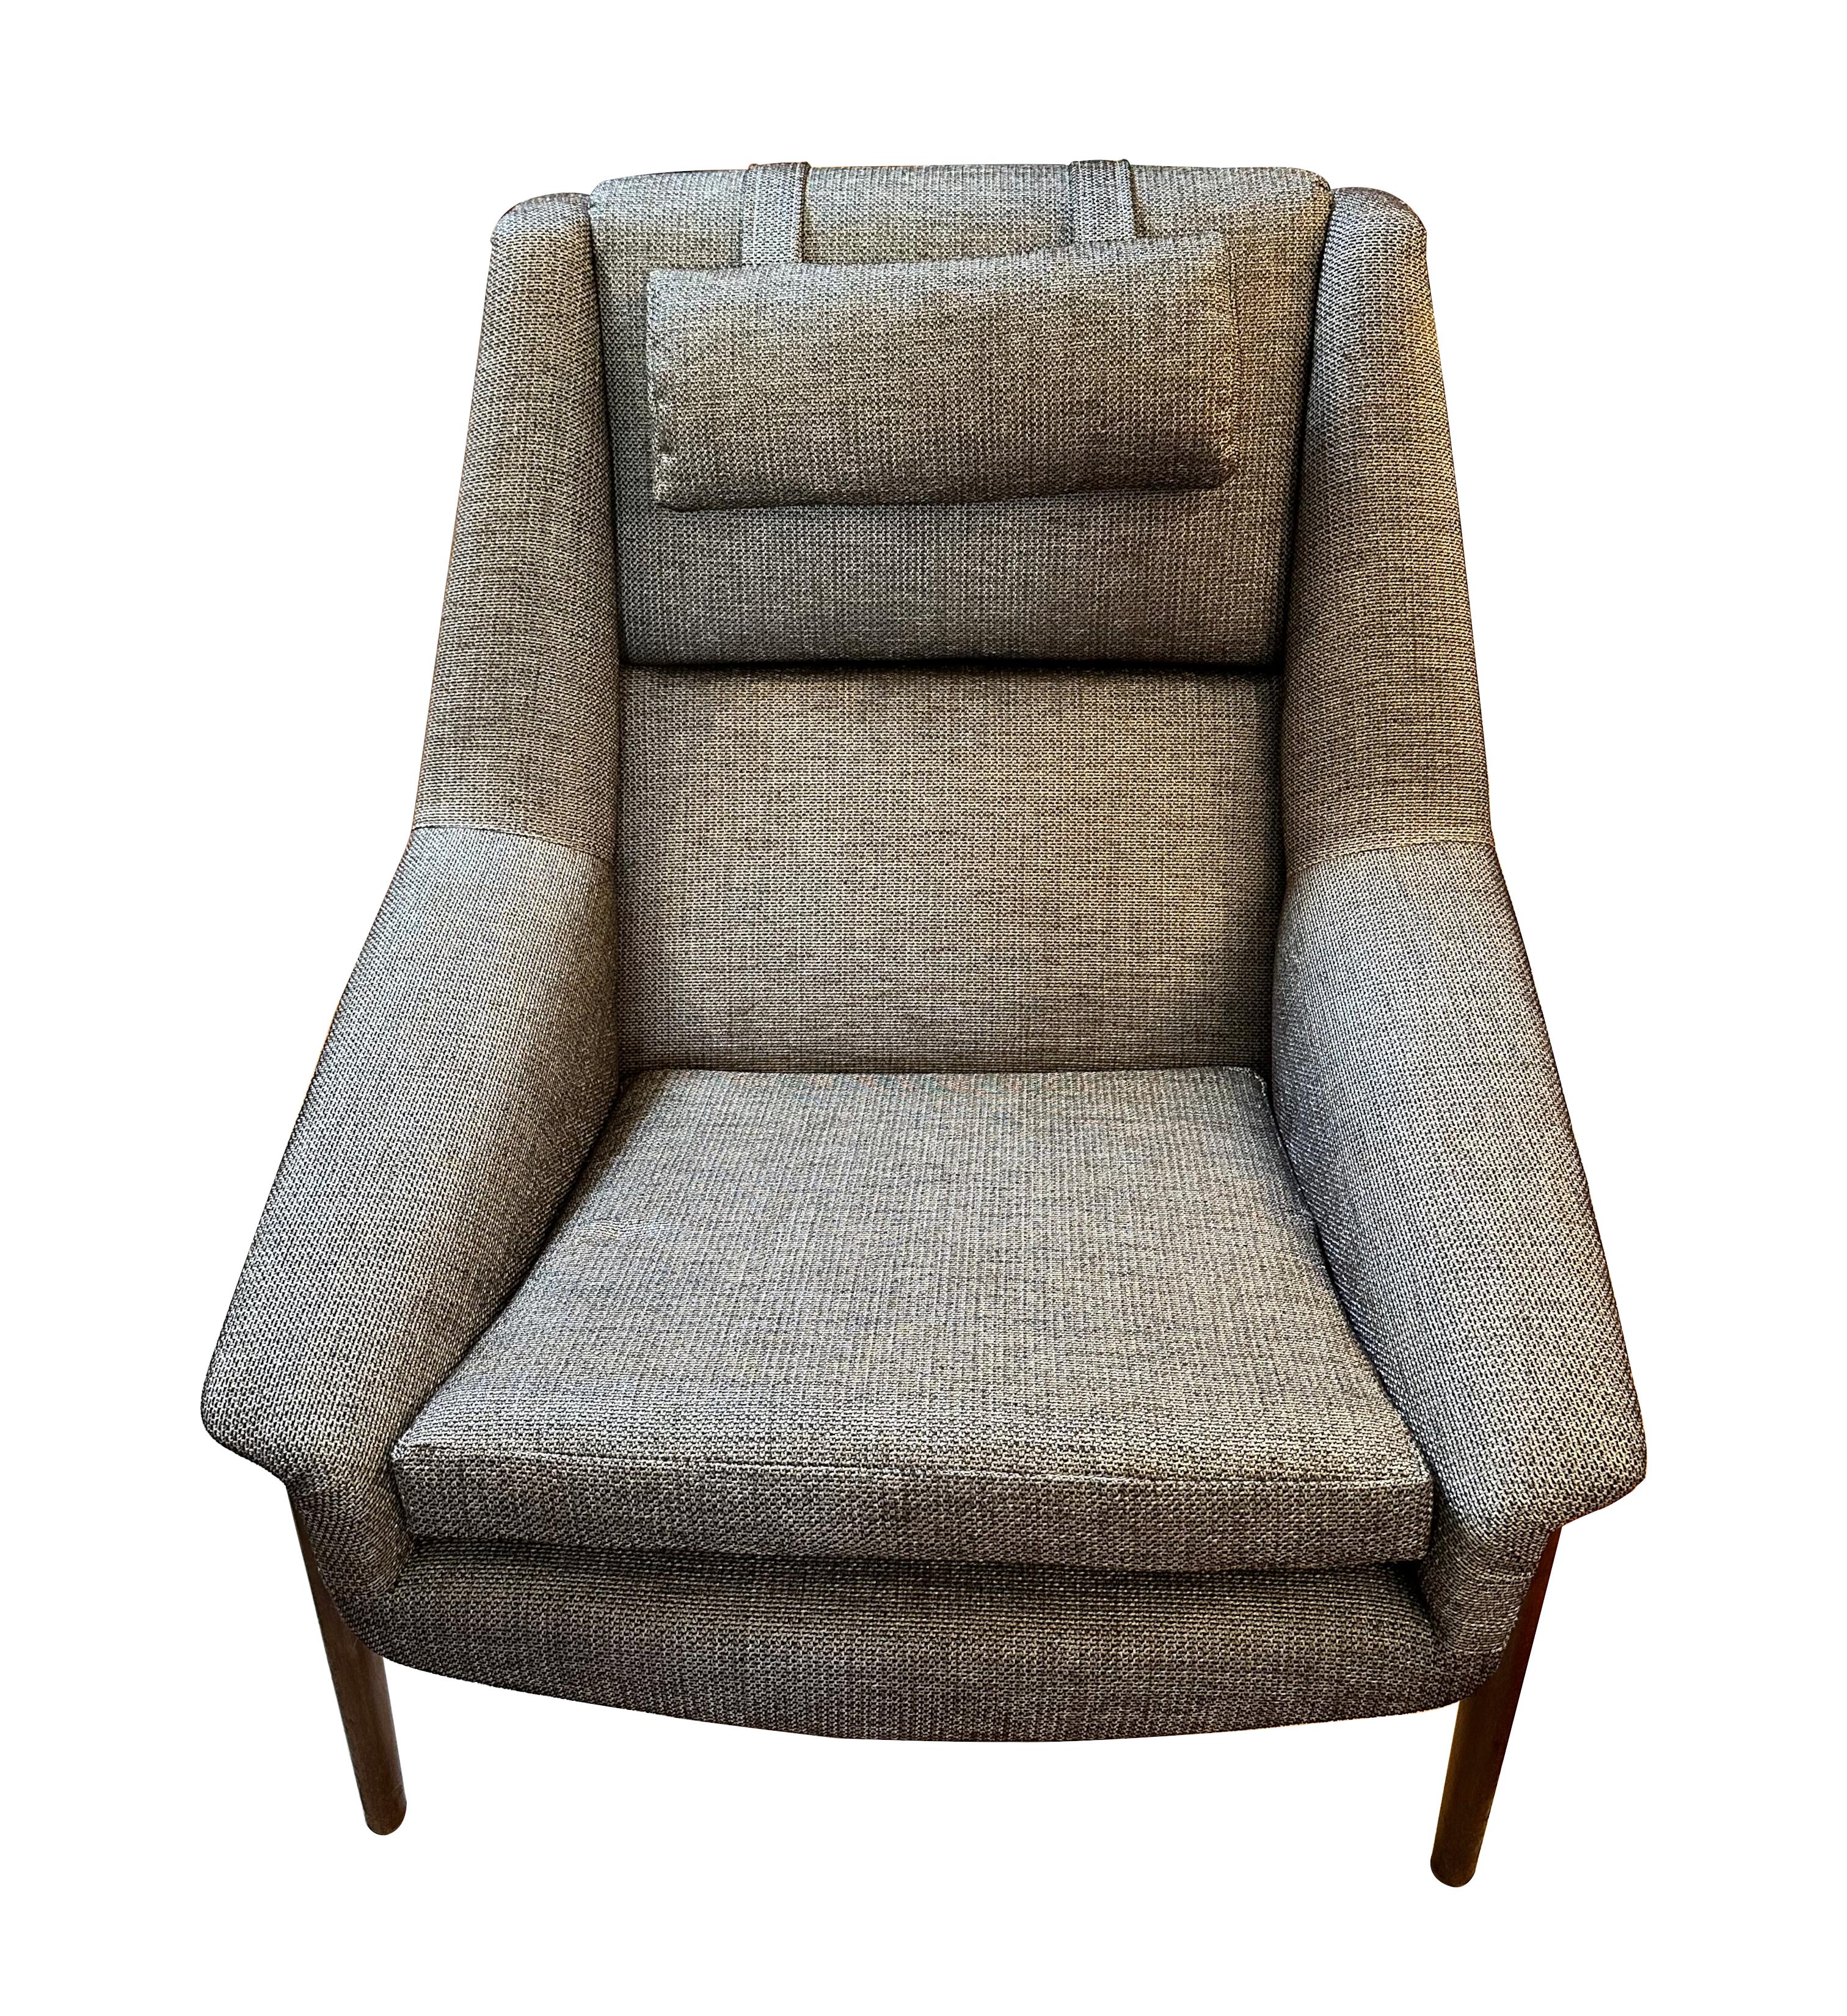 Swedish Scandinavian Modern Profil Lounge Chair by Folke Ohlsson for Dux Sweden